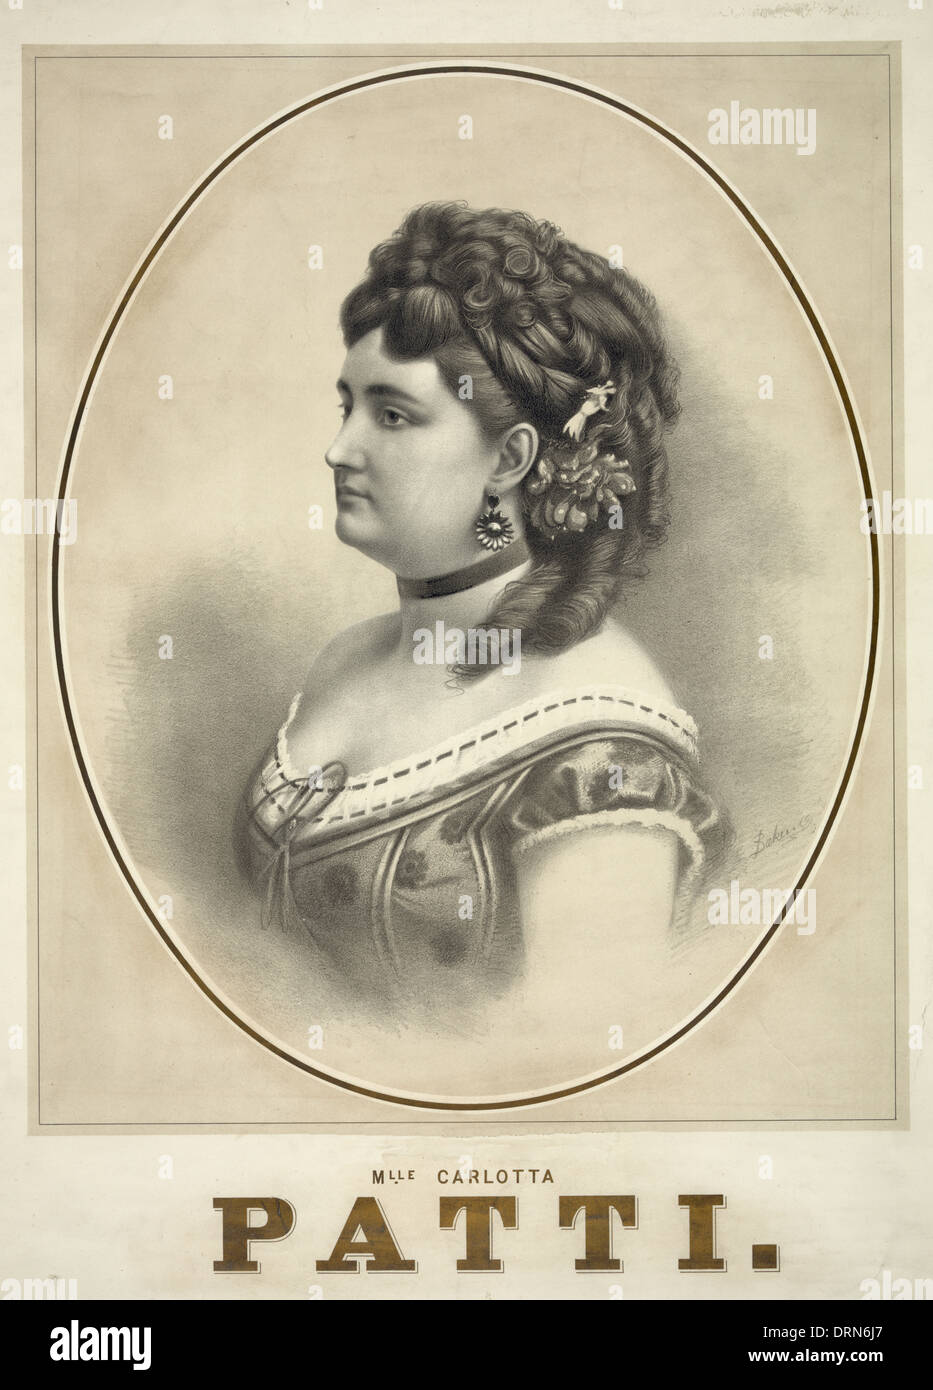 Carlotta Patti - (c. 1840 - 27 de junio de 1889) fue una soprano lírico del siglo xix, circa 1870 Foto de stock